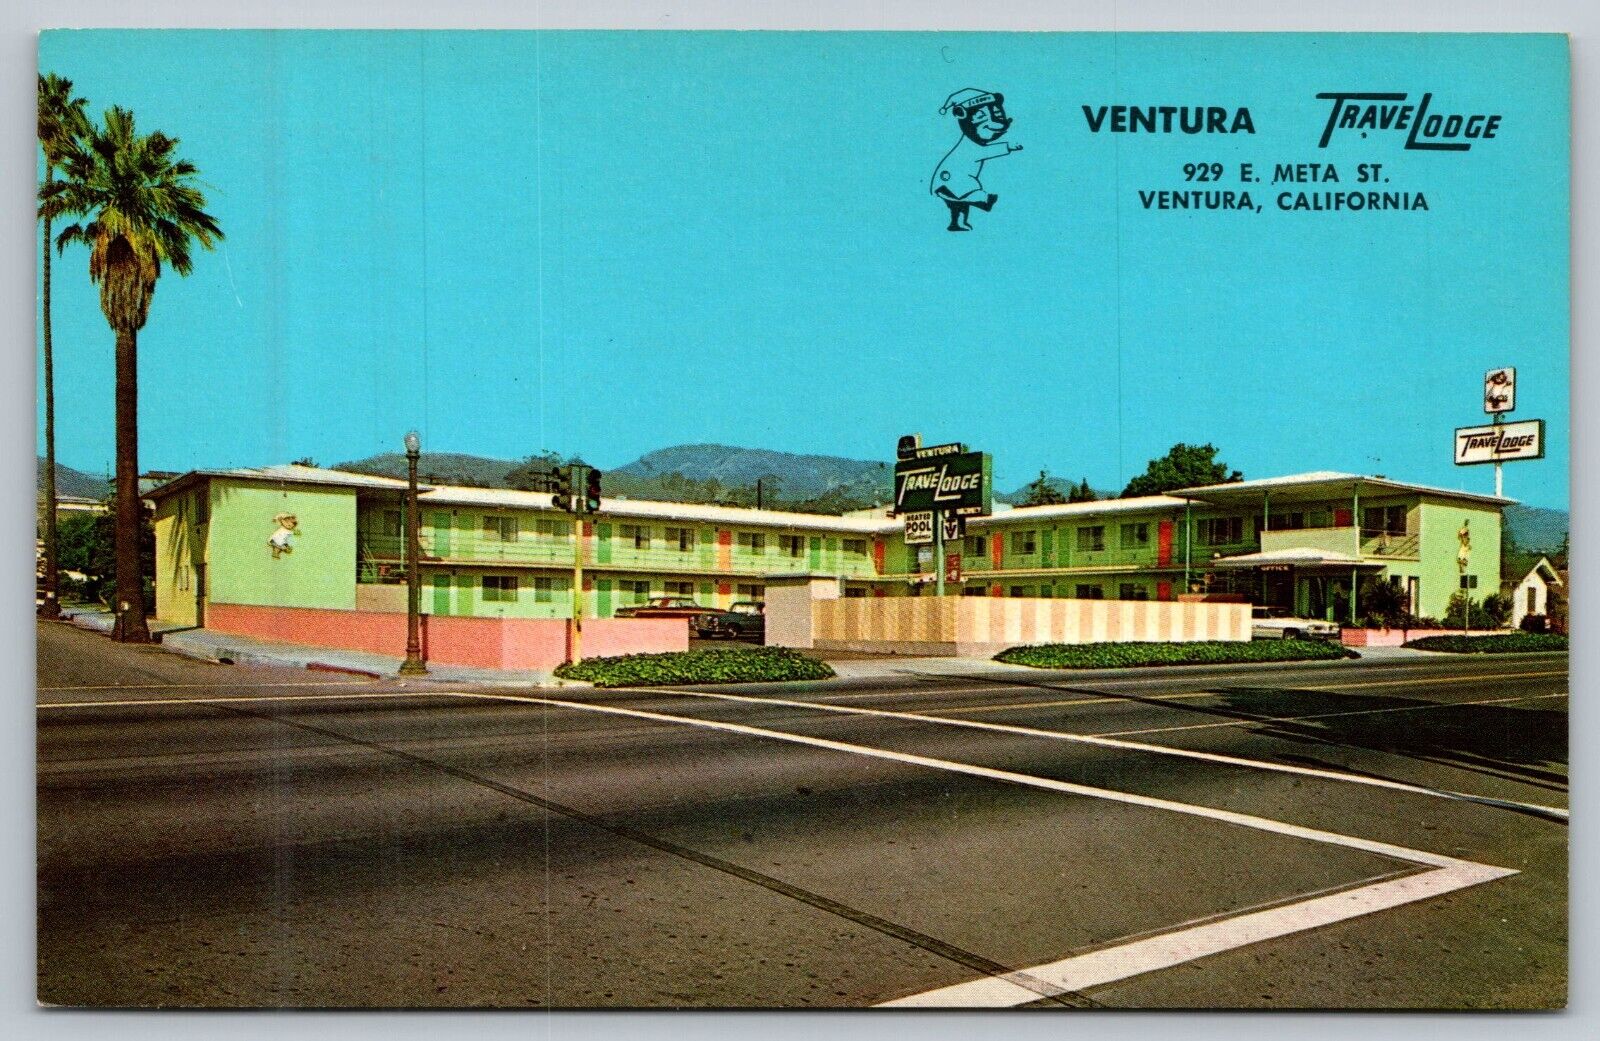 Ventura California Ventura Travelodge Vintage Postcard 